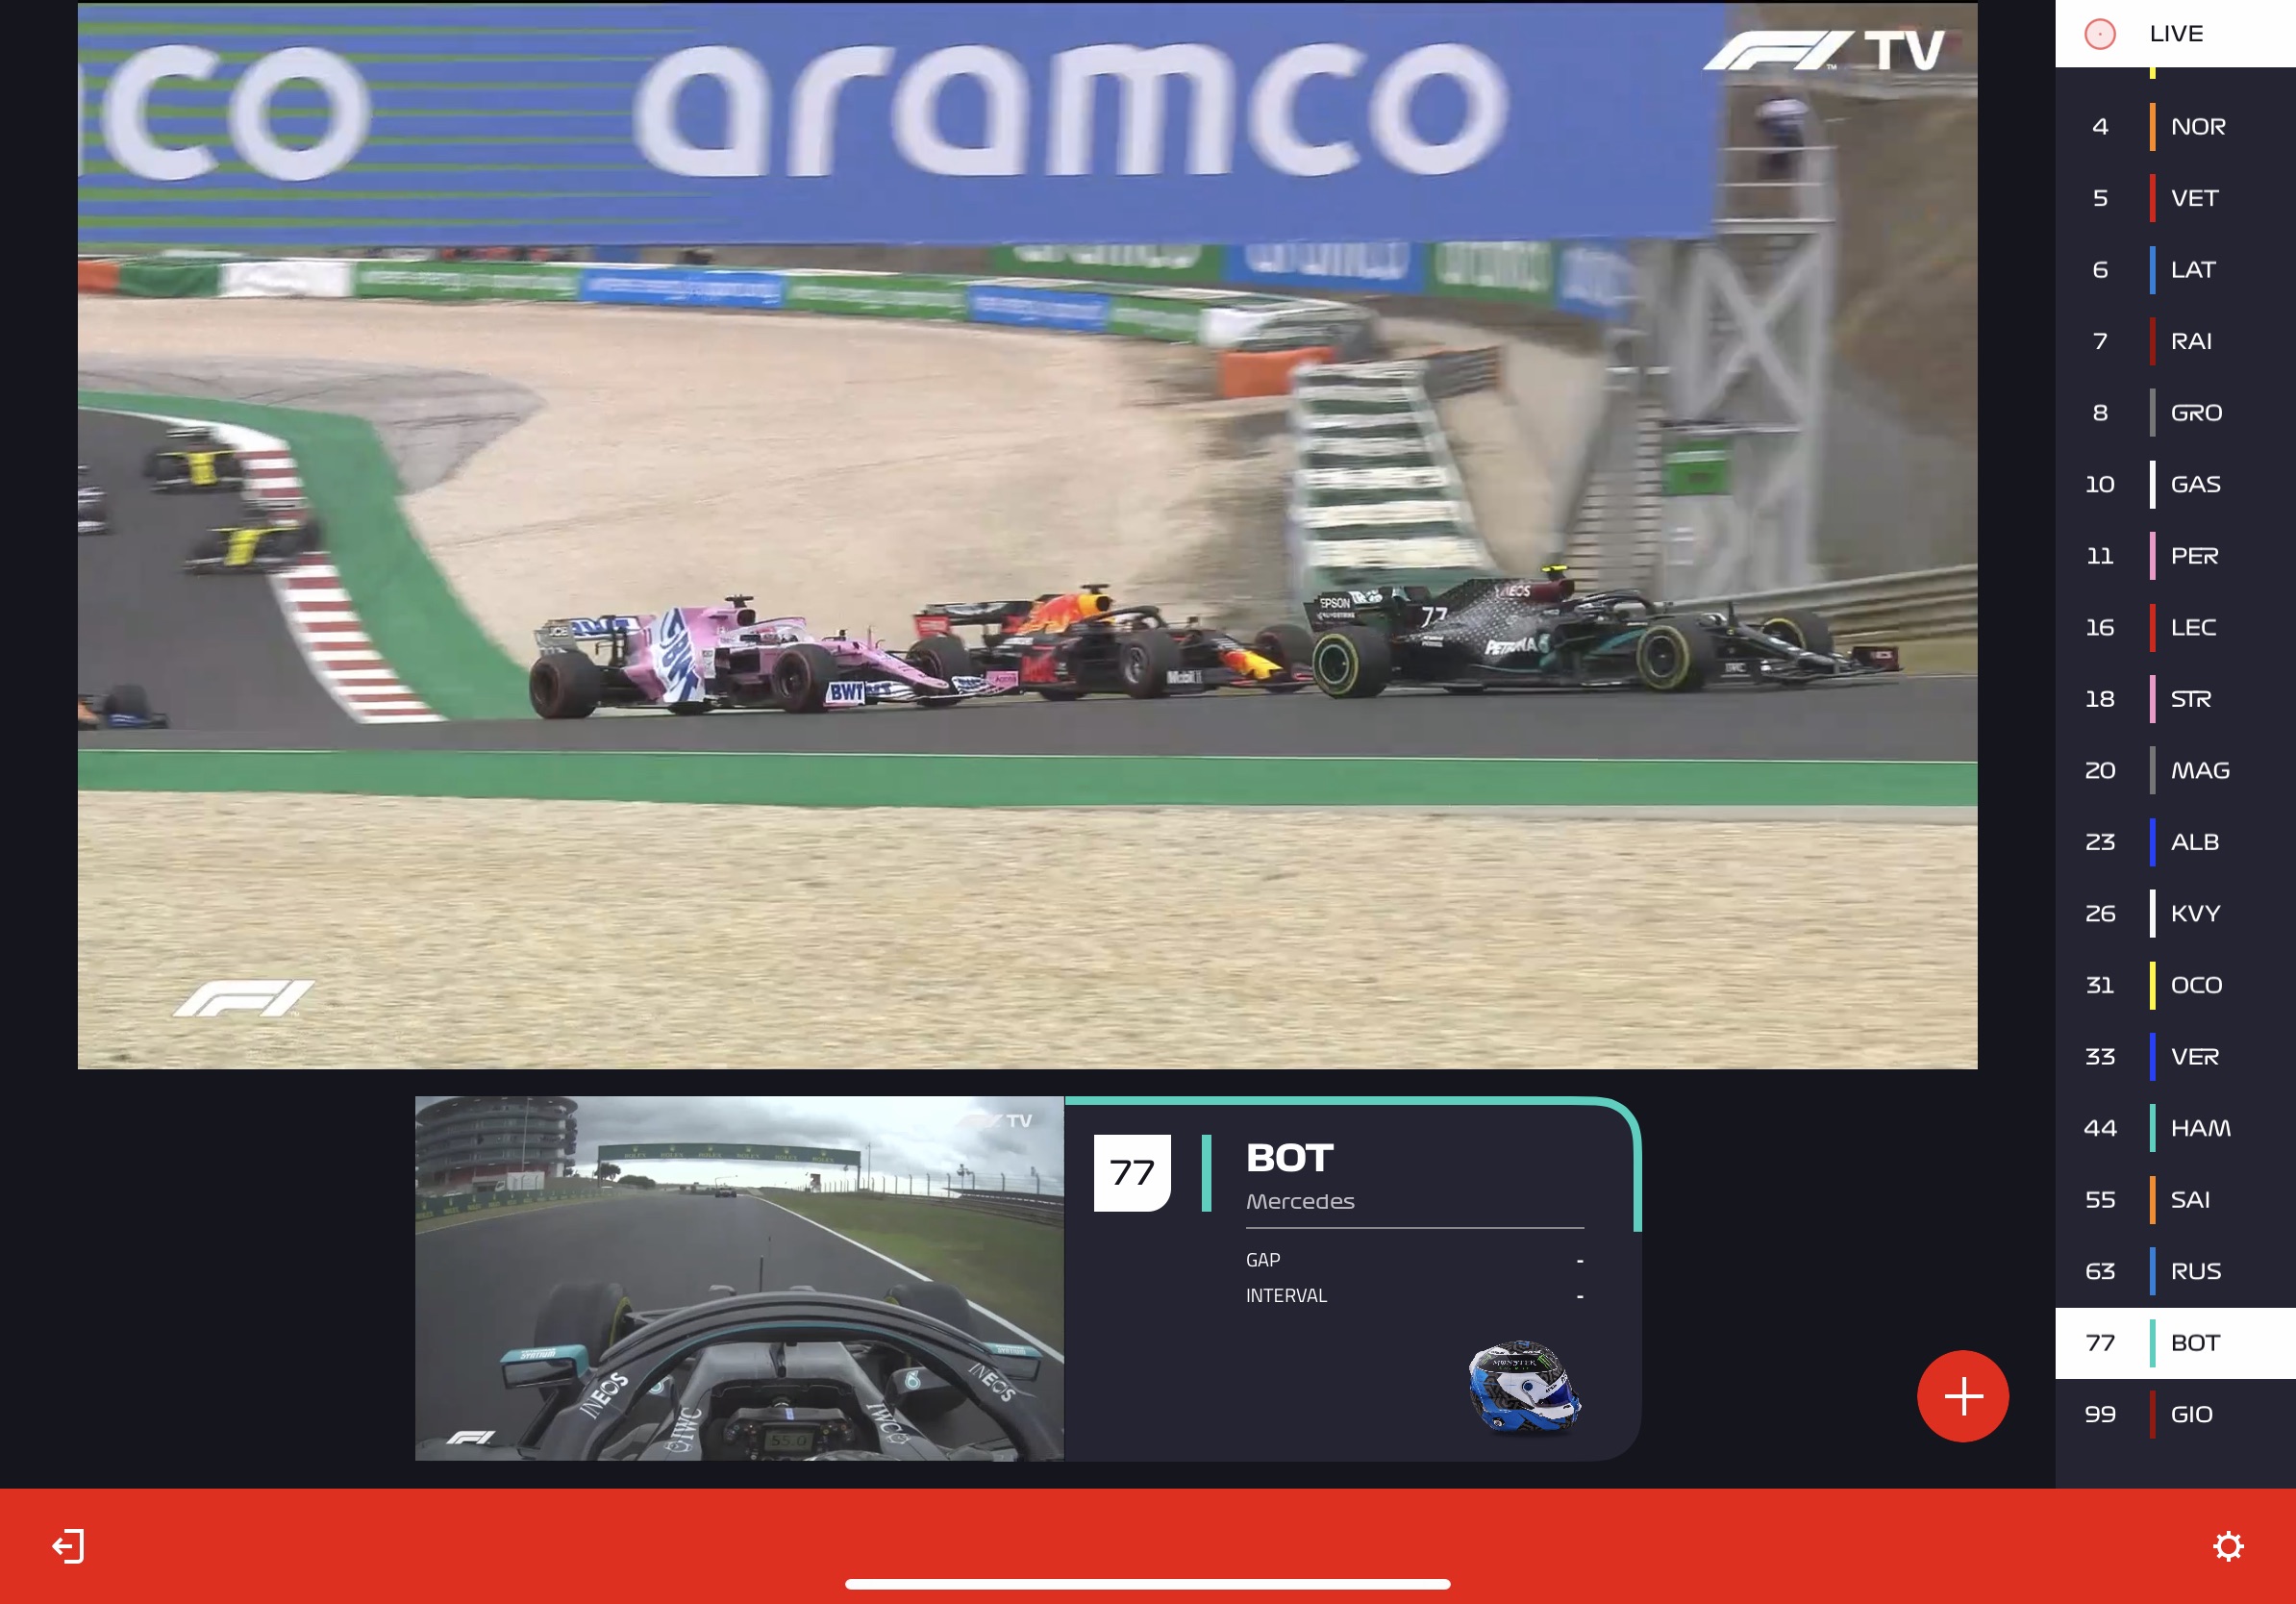 F1 TV Screengrab: Perez makes a move on Verstappen running in the tiretracks of Bottas